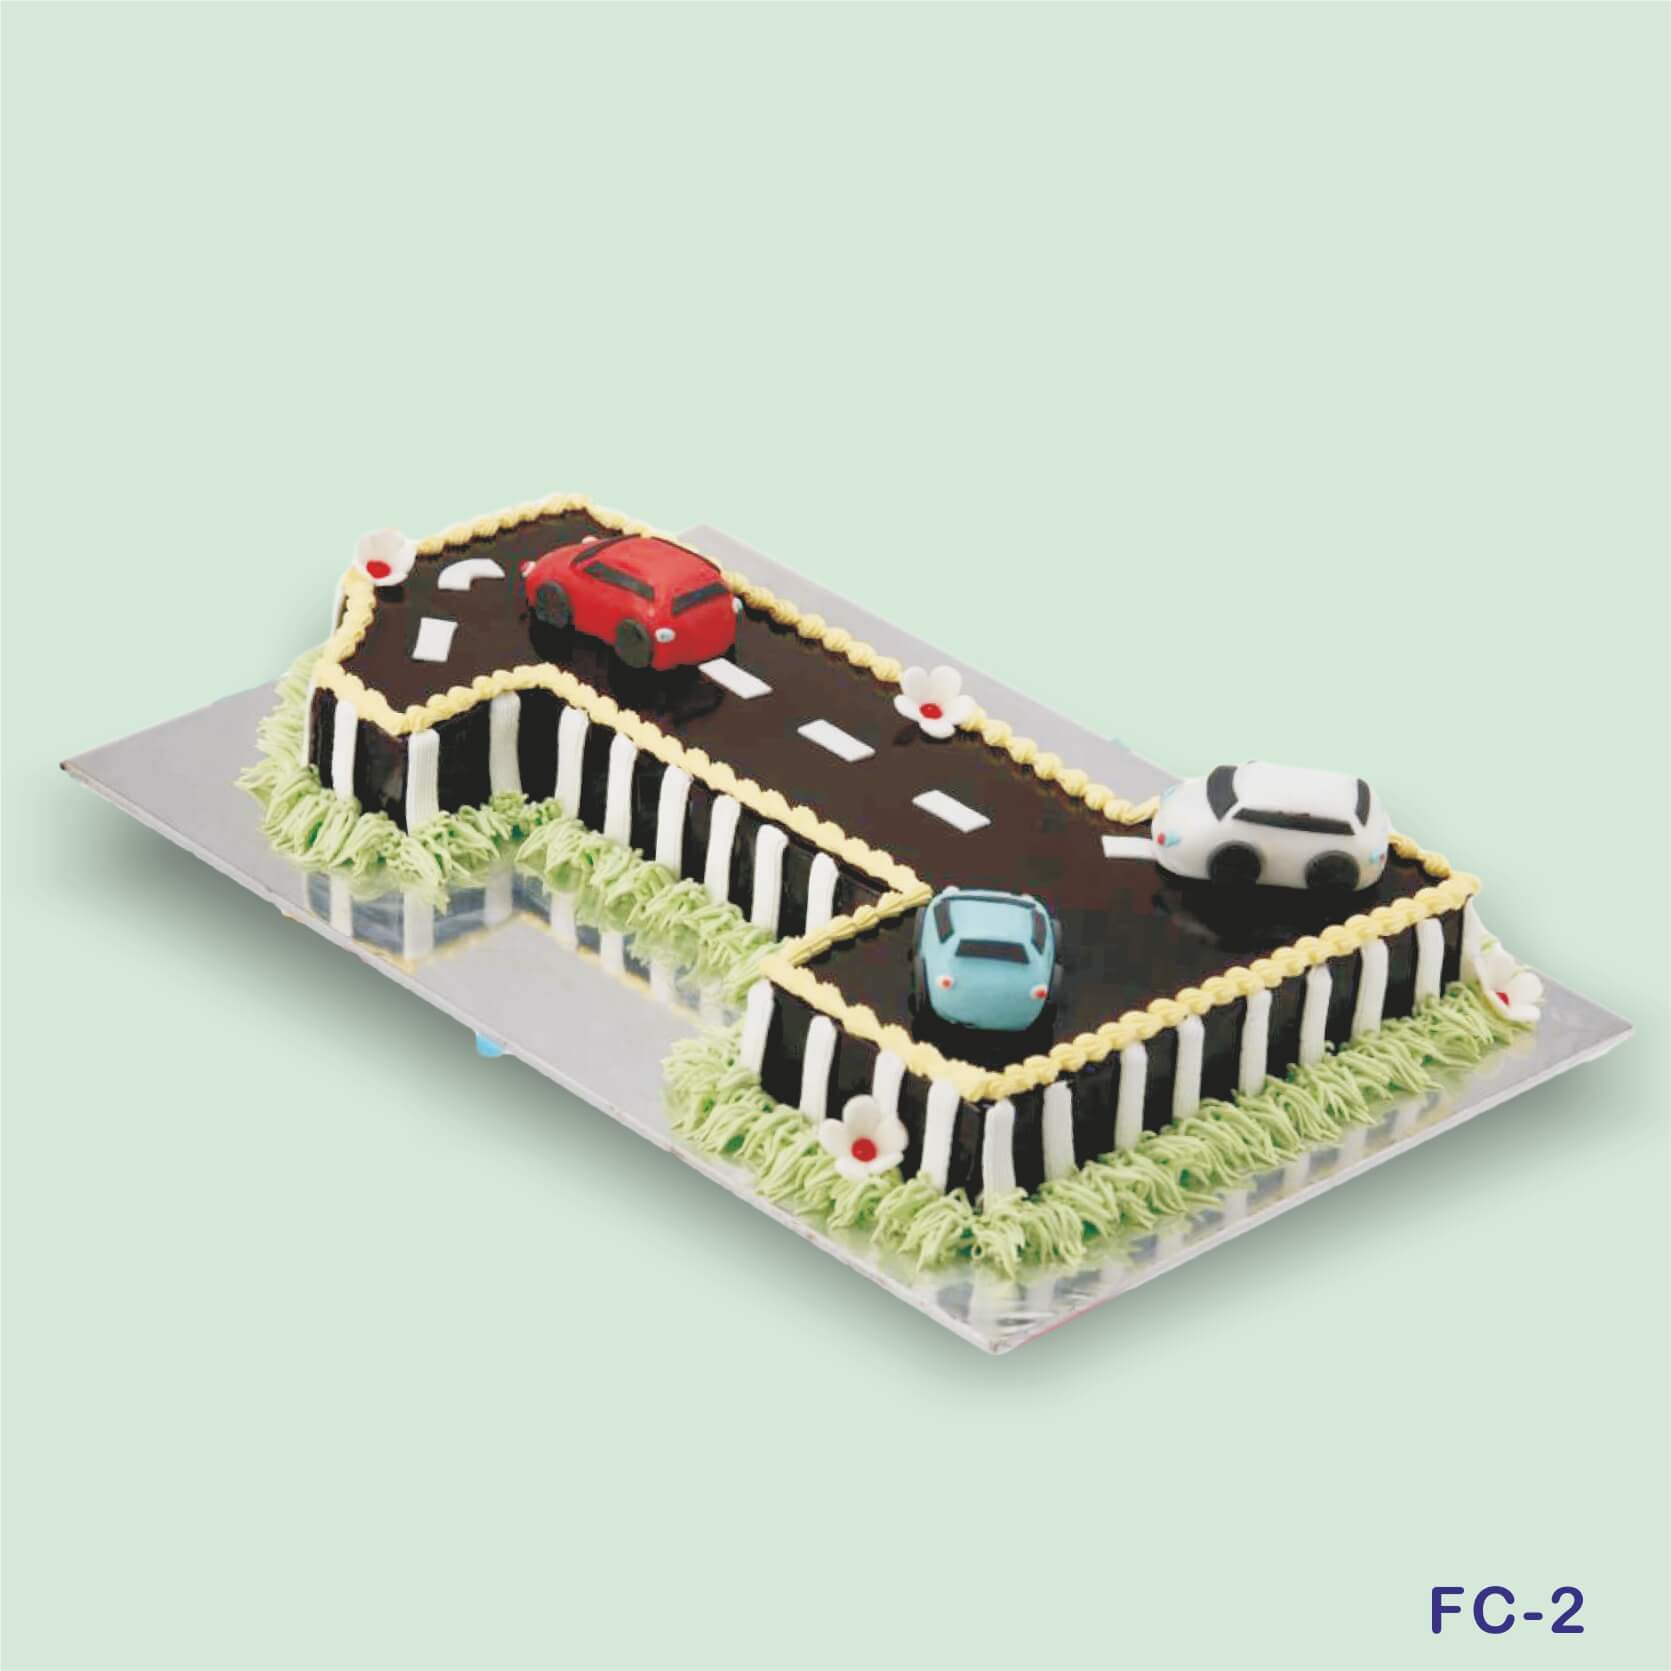 Racetrack Theme Cake